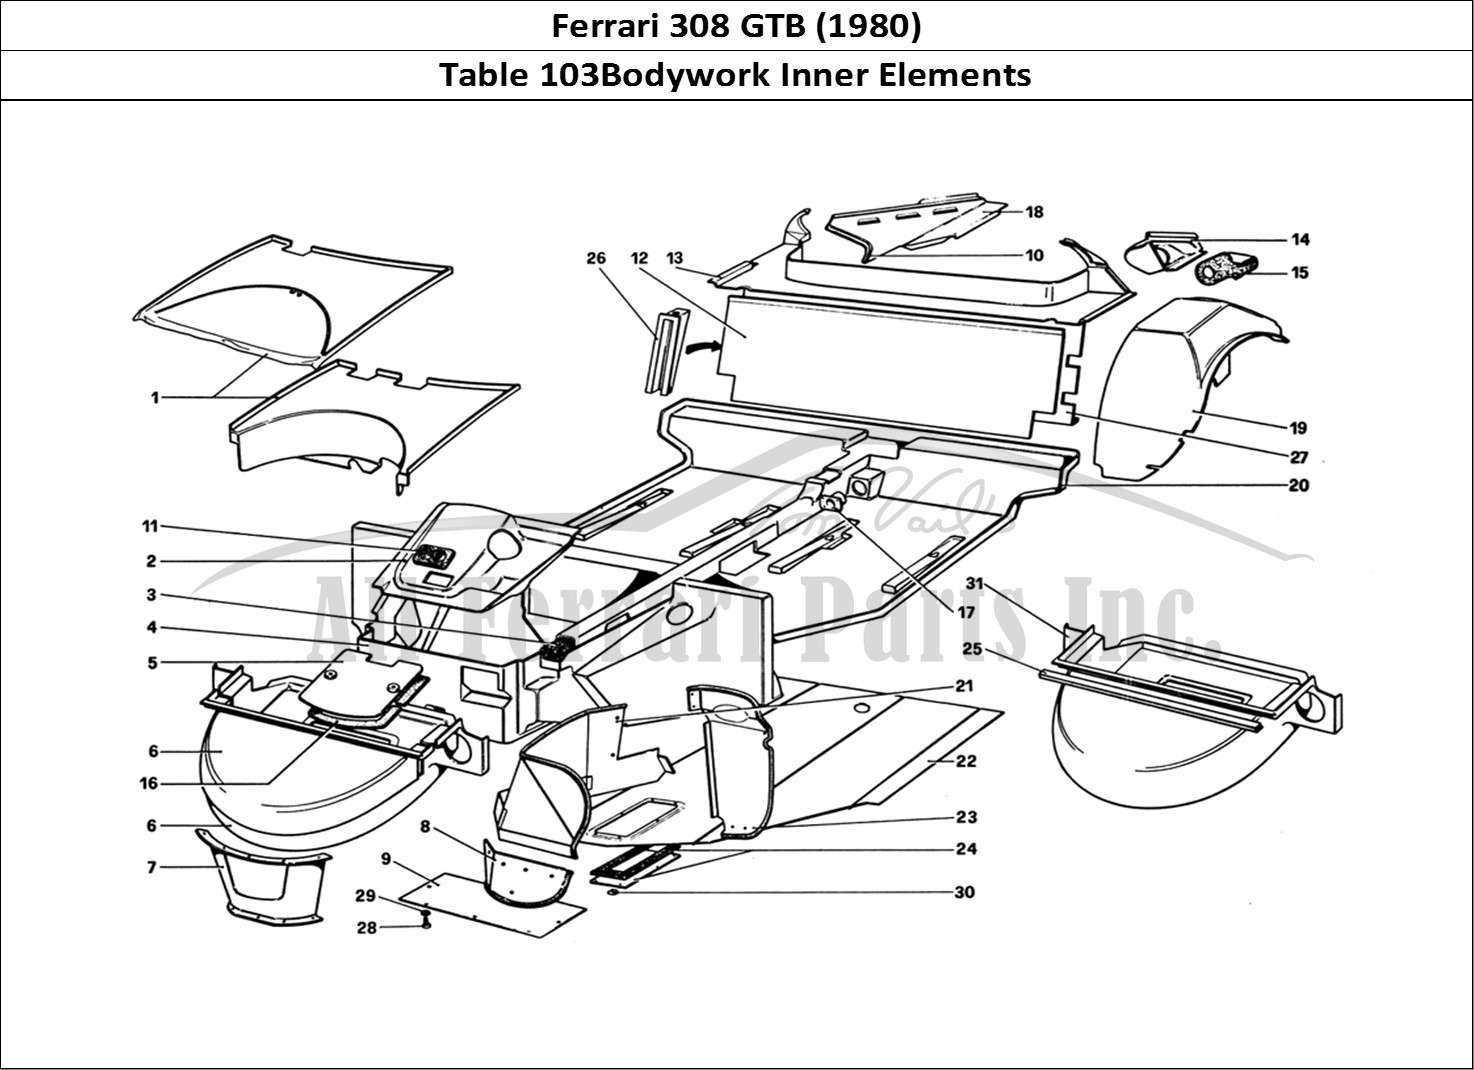 Ferrari Parts Ferrari 308 GTB (1980) Page 103 Body Shell - Inner Elemen